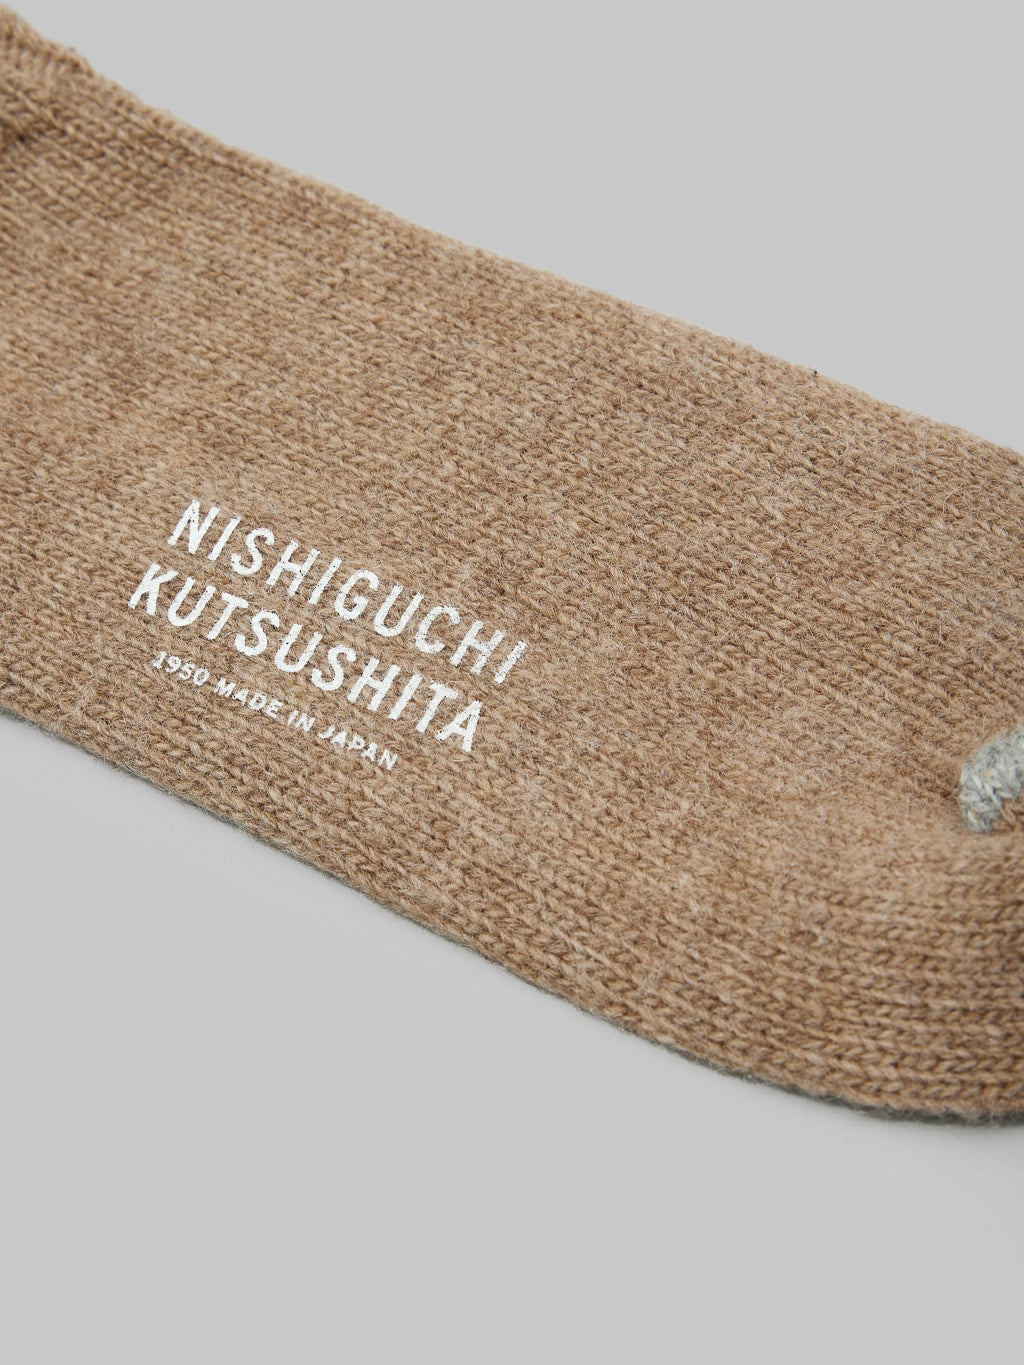 nishiguchi kutsushita praha wool ribbed socks beige stamped logo